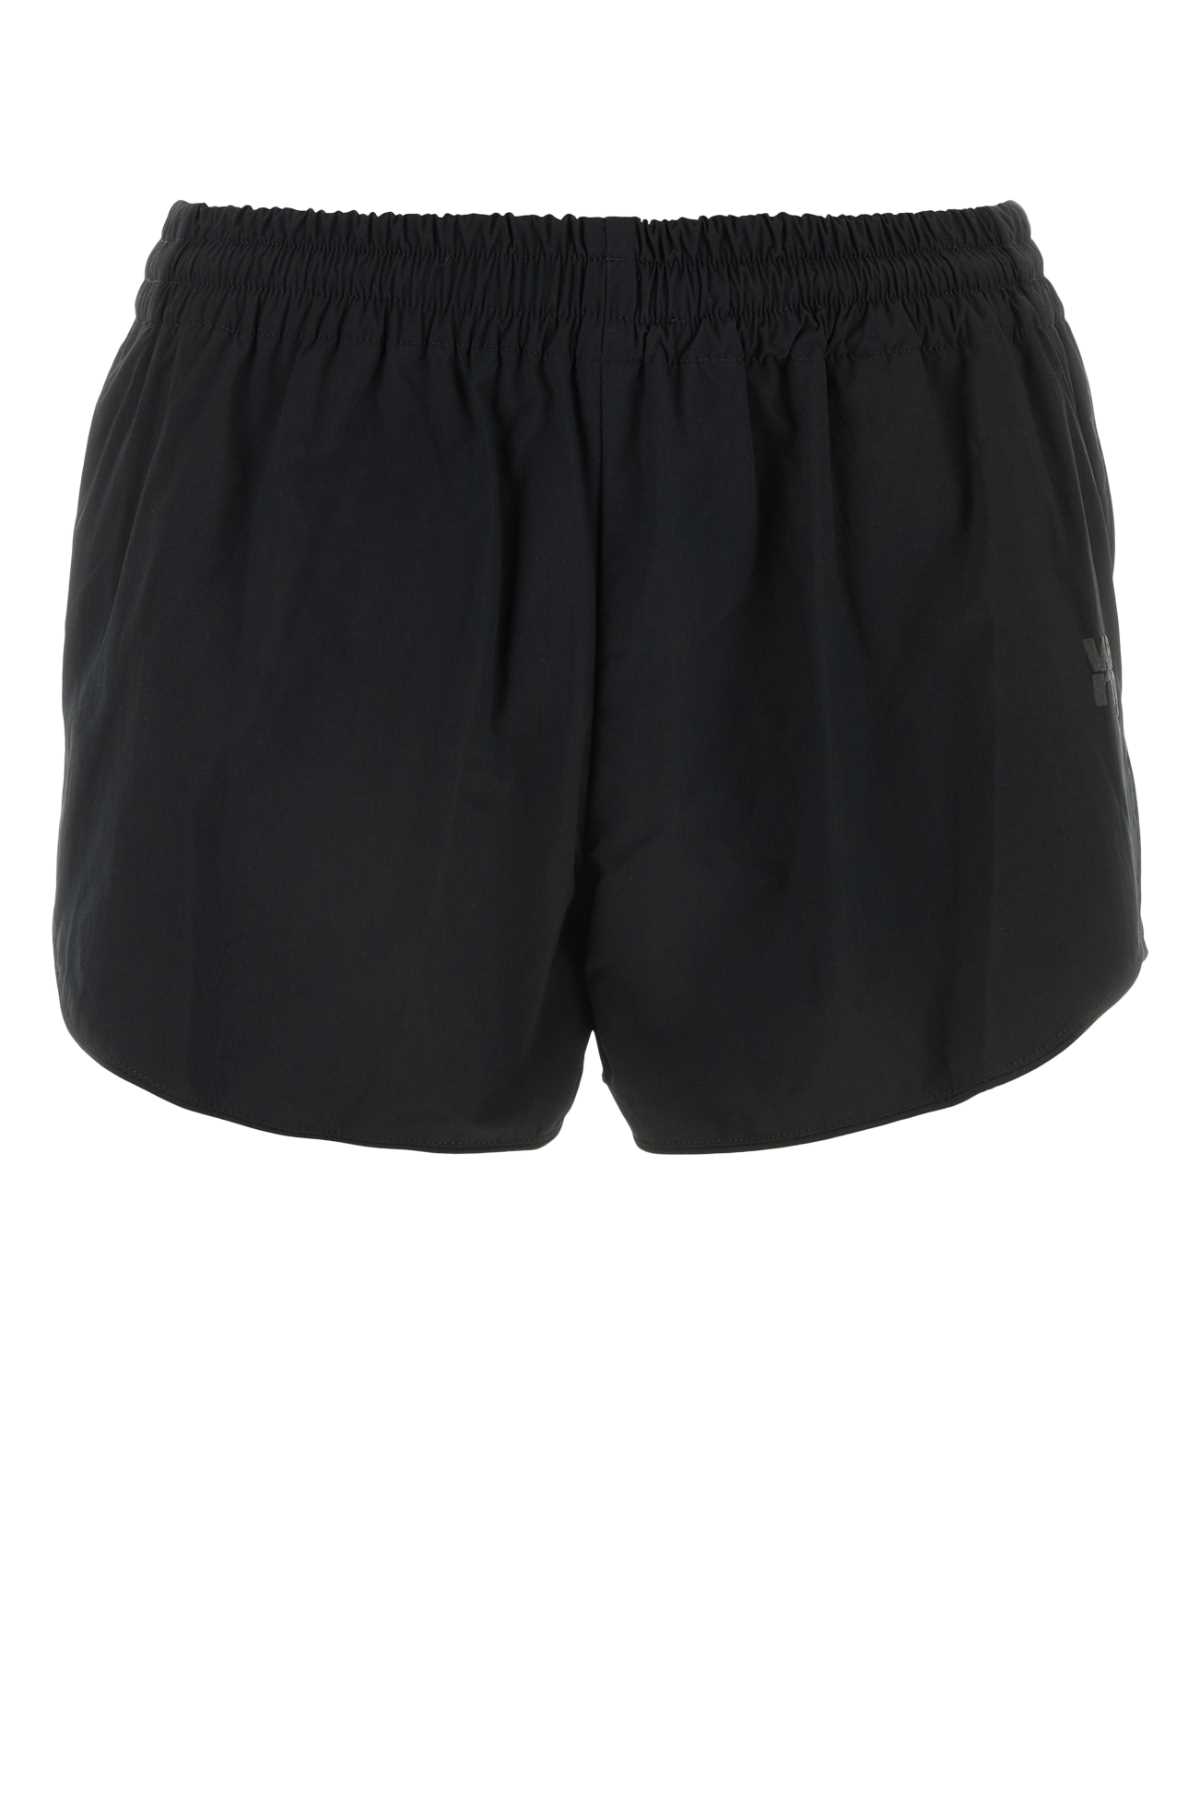 Black Polyester Blend Shorts